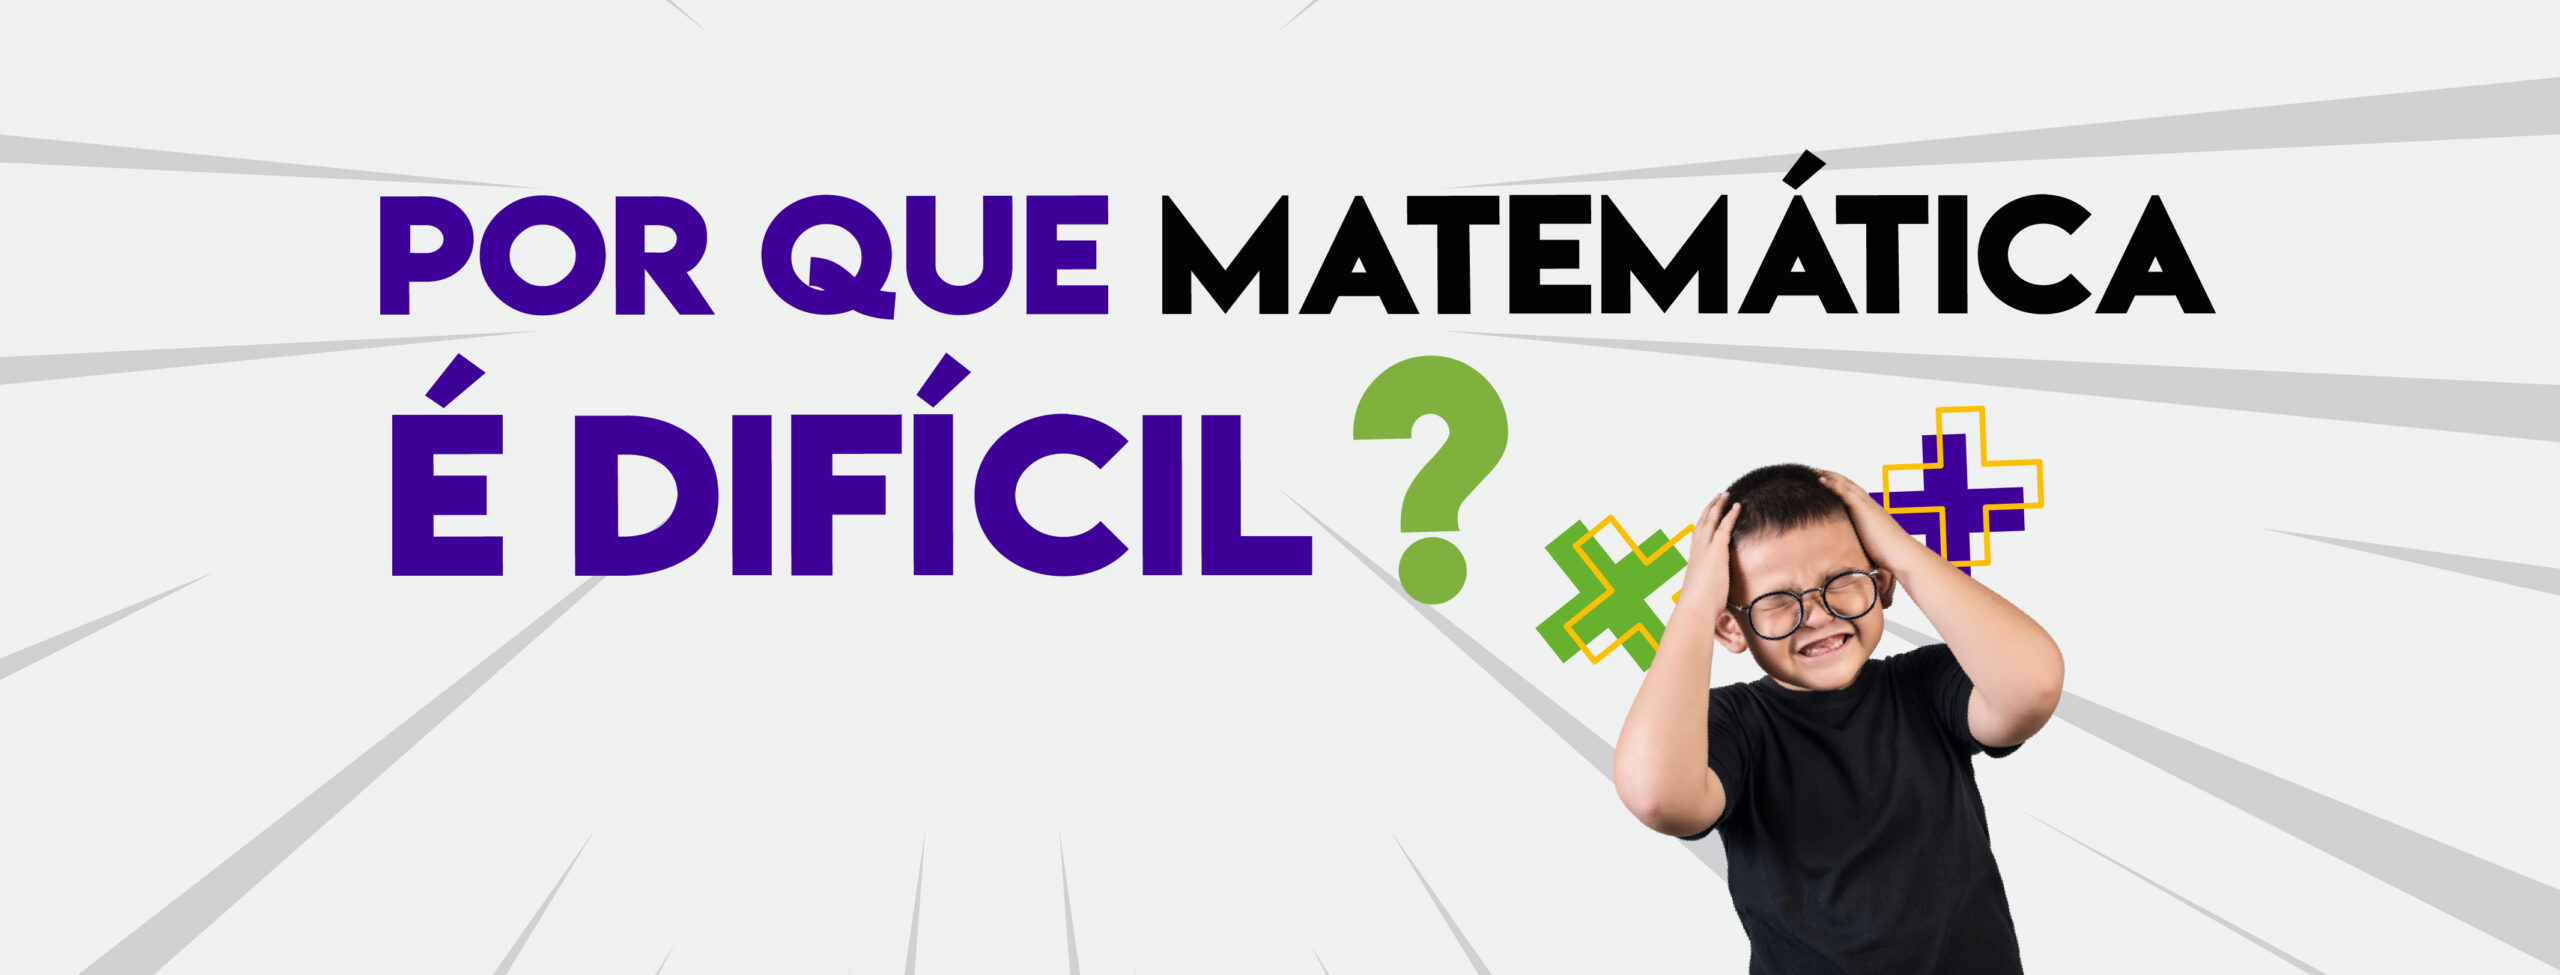 matematica-dificil - Português